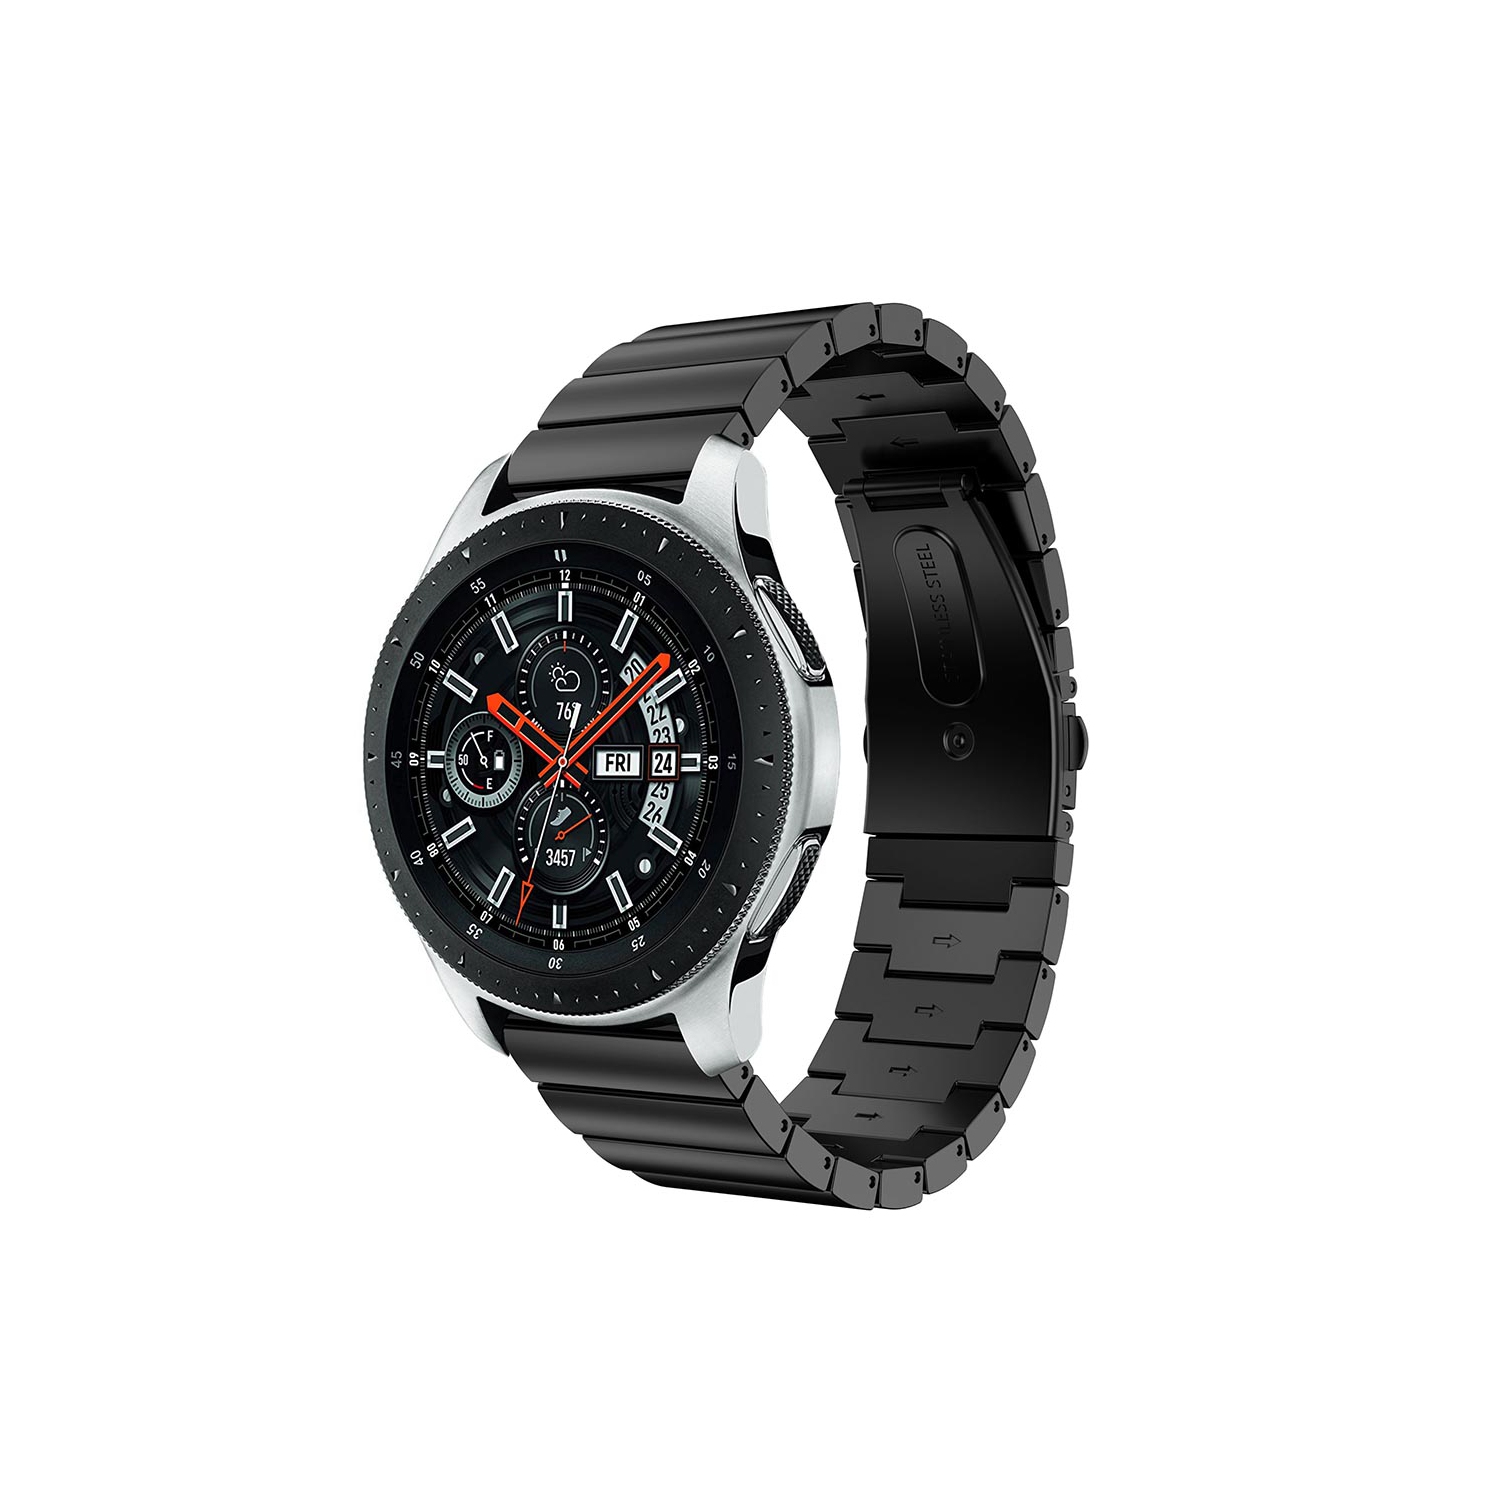 StrapsCo Bracelet Watch Band Compatible with Samsung Galaxy Watch, Galaxy Watch Active, Gear S3 & Gear Live - 22mm - Black